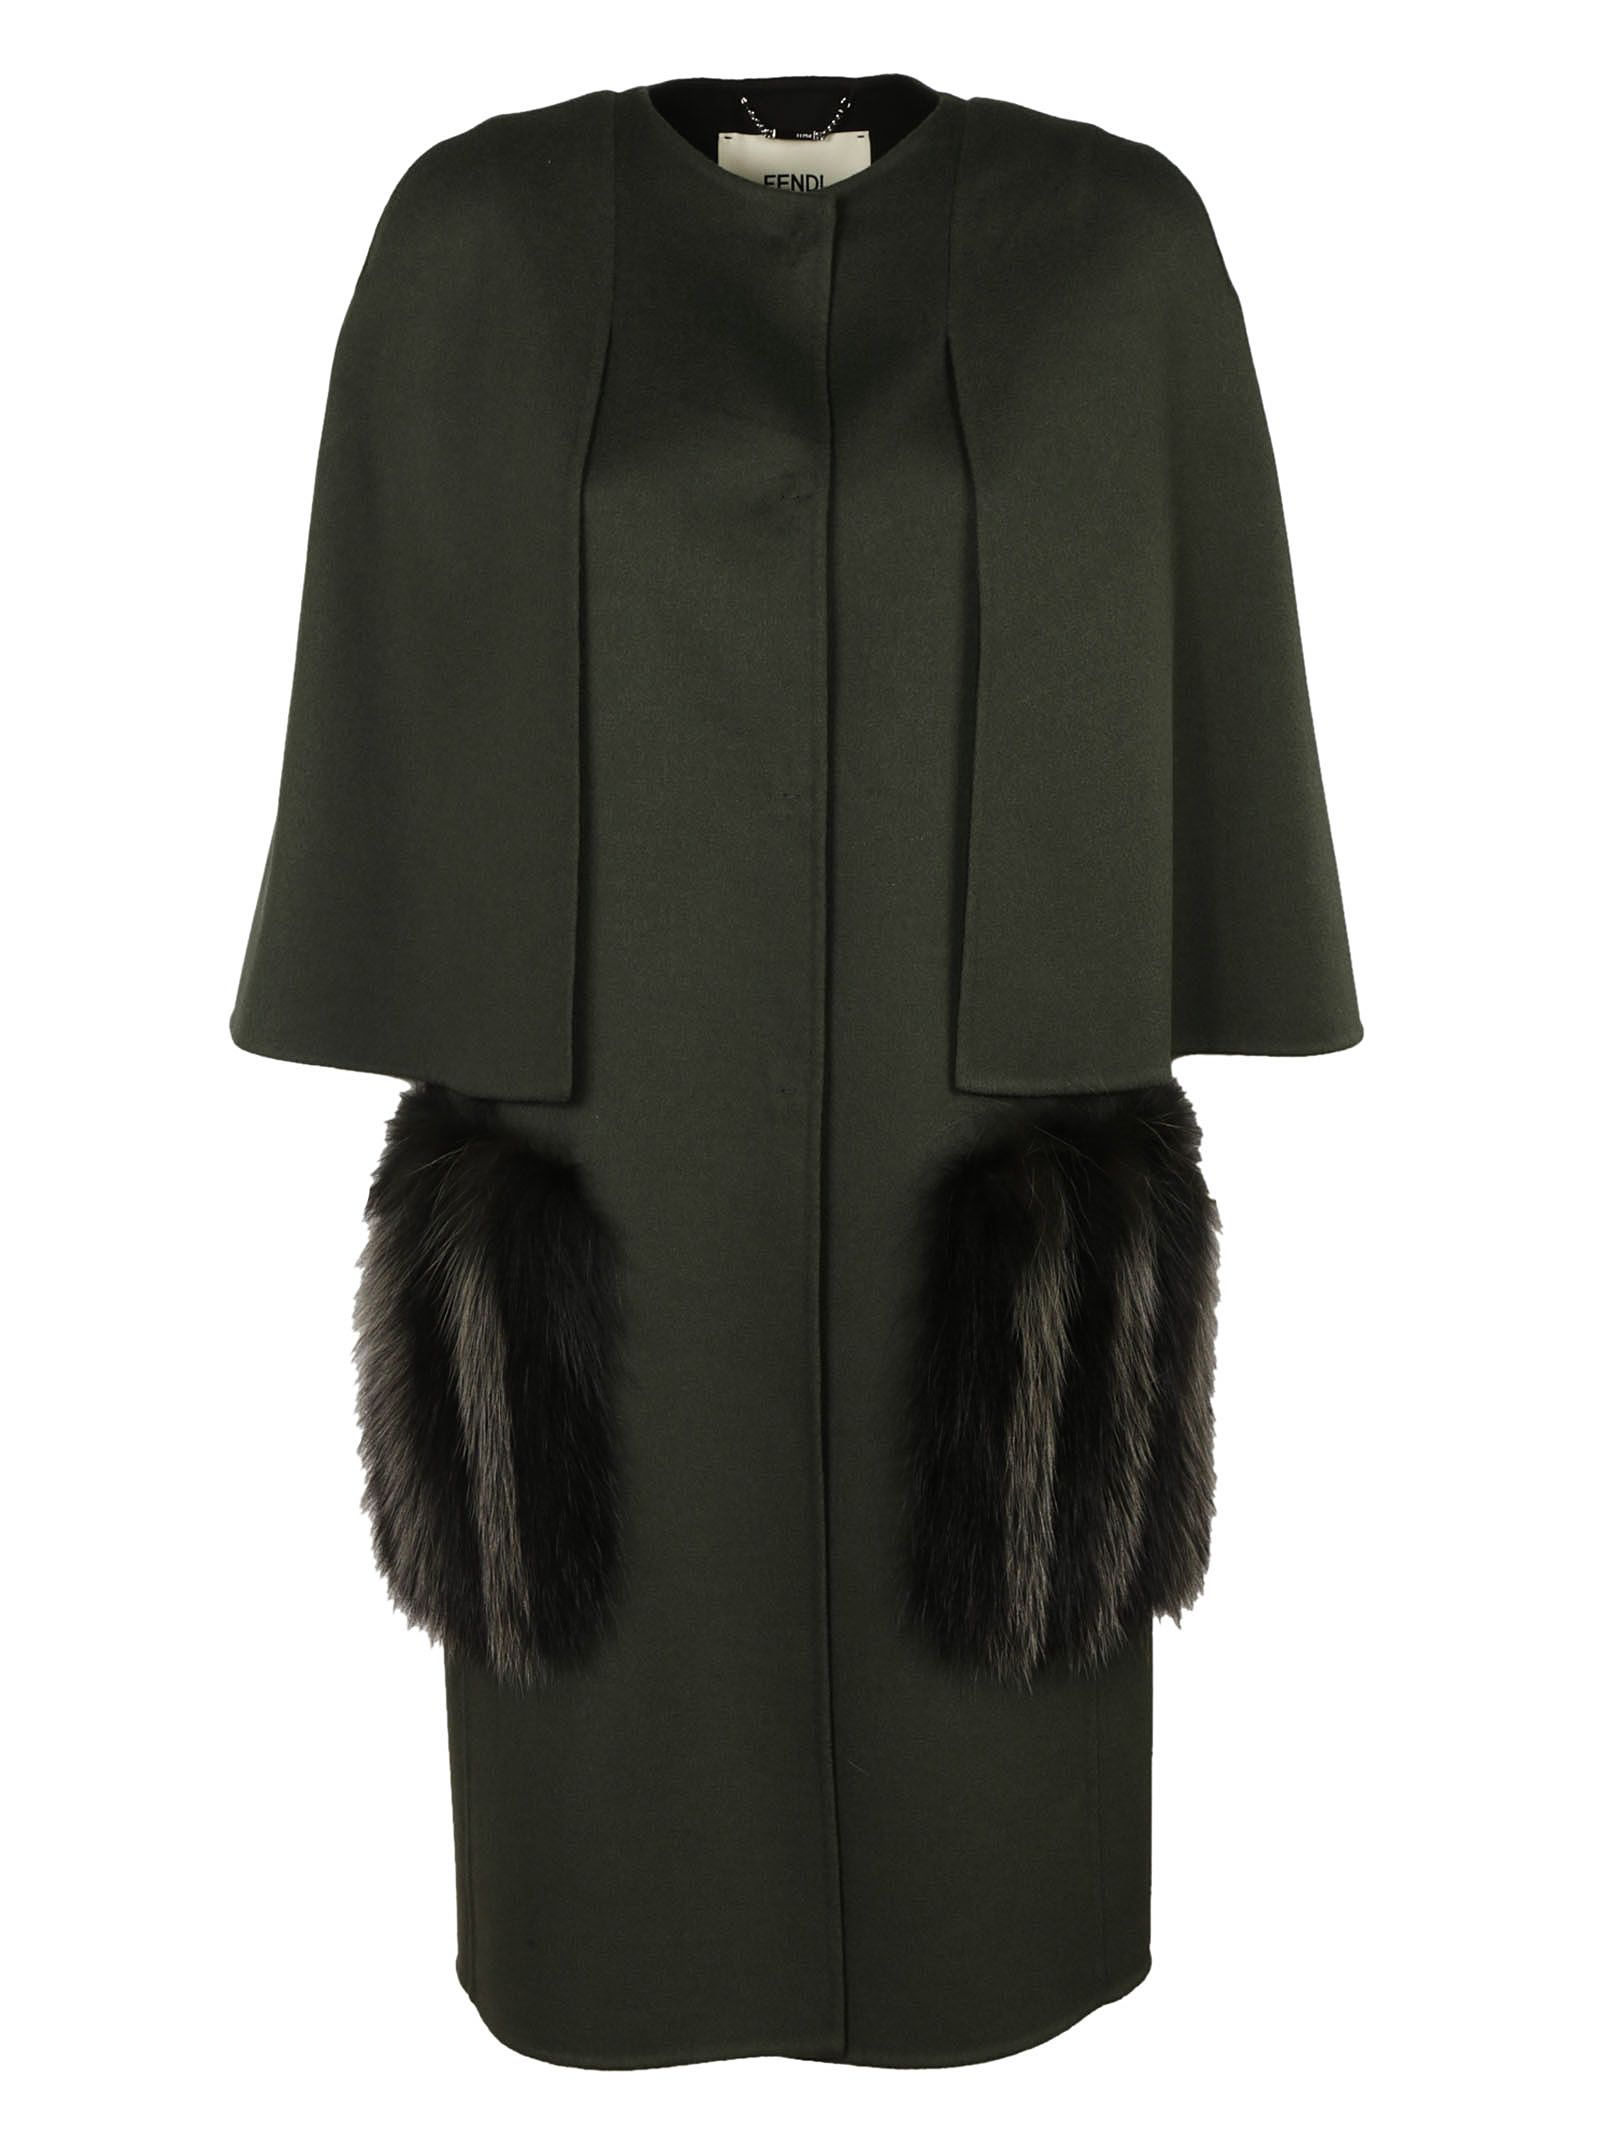 Fendi - Fendi Pocket Embellished Coat - Green, Women's Coats | Italist